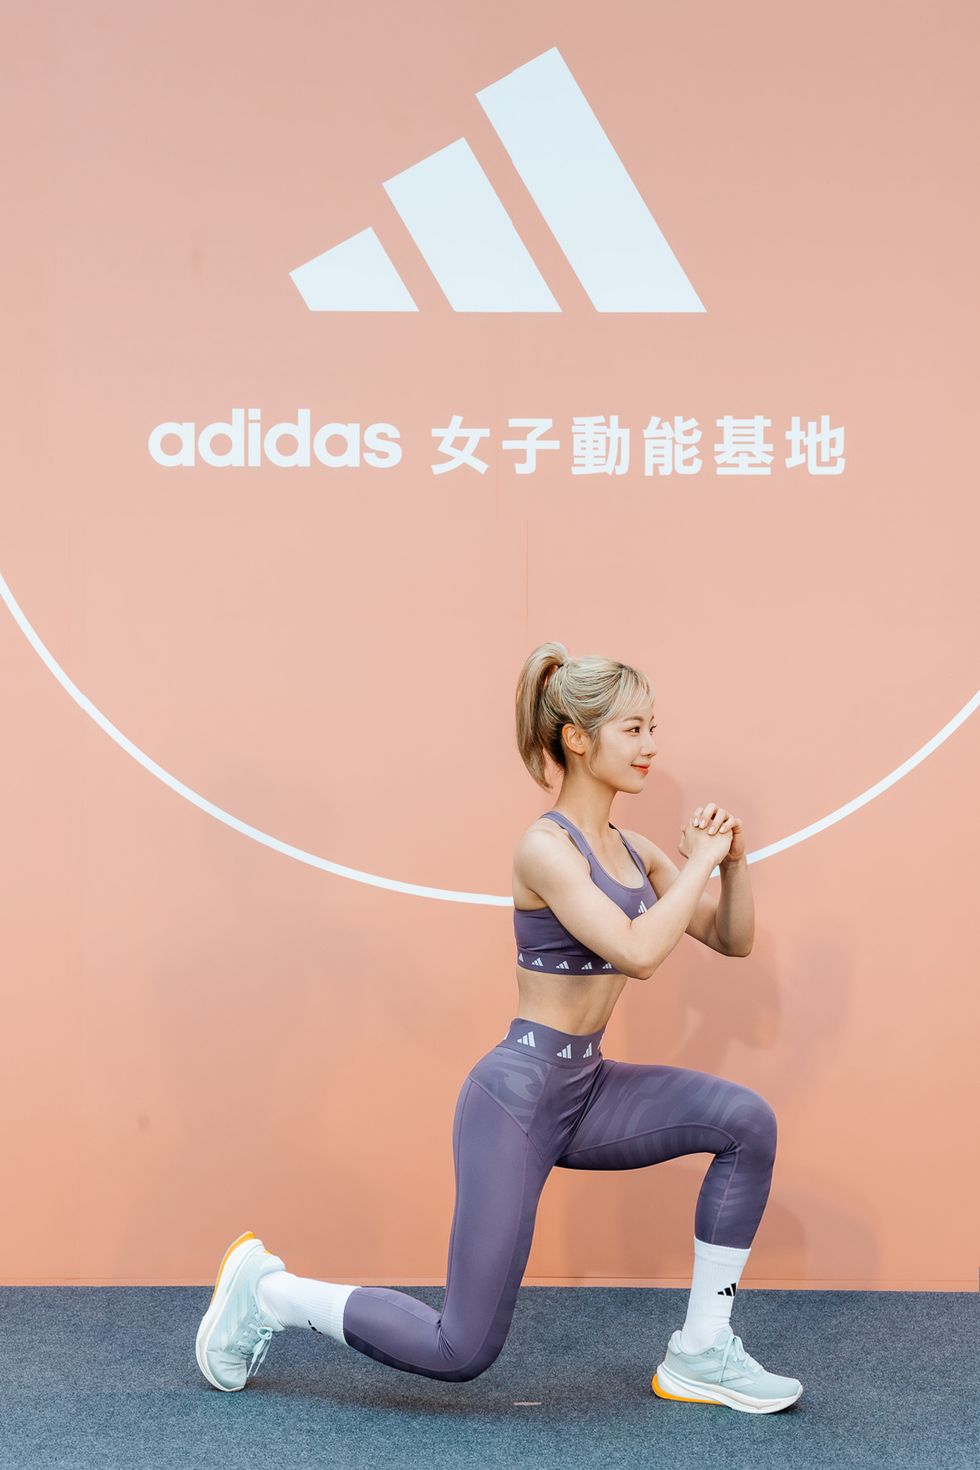 「adidas女子動能基地」，邀請所有愛運動的女性一起宣示運動目標！開幕首日更跨海邀請韓國首席運動女神—沈音燈做為開幕嘉賓，分享她對運動的熱忱以及跑步心得！